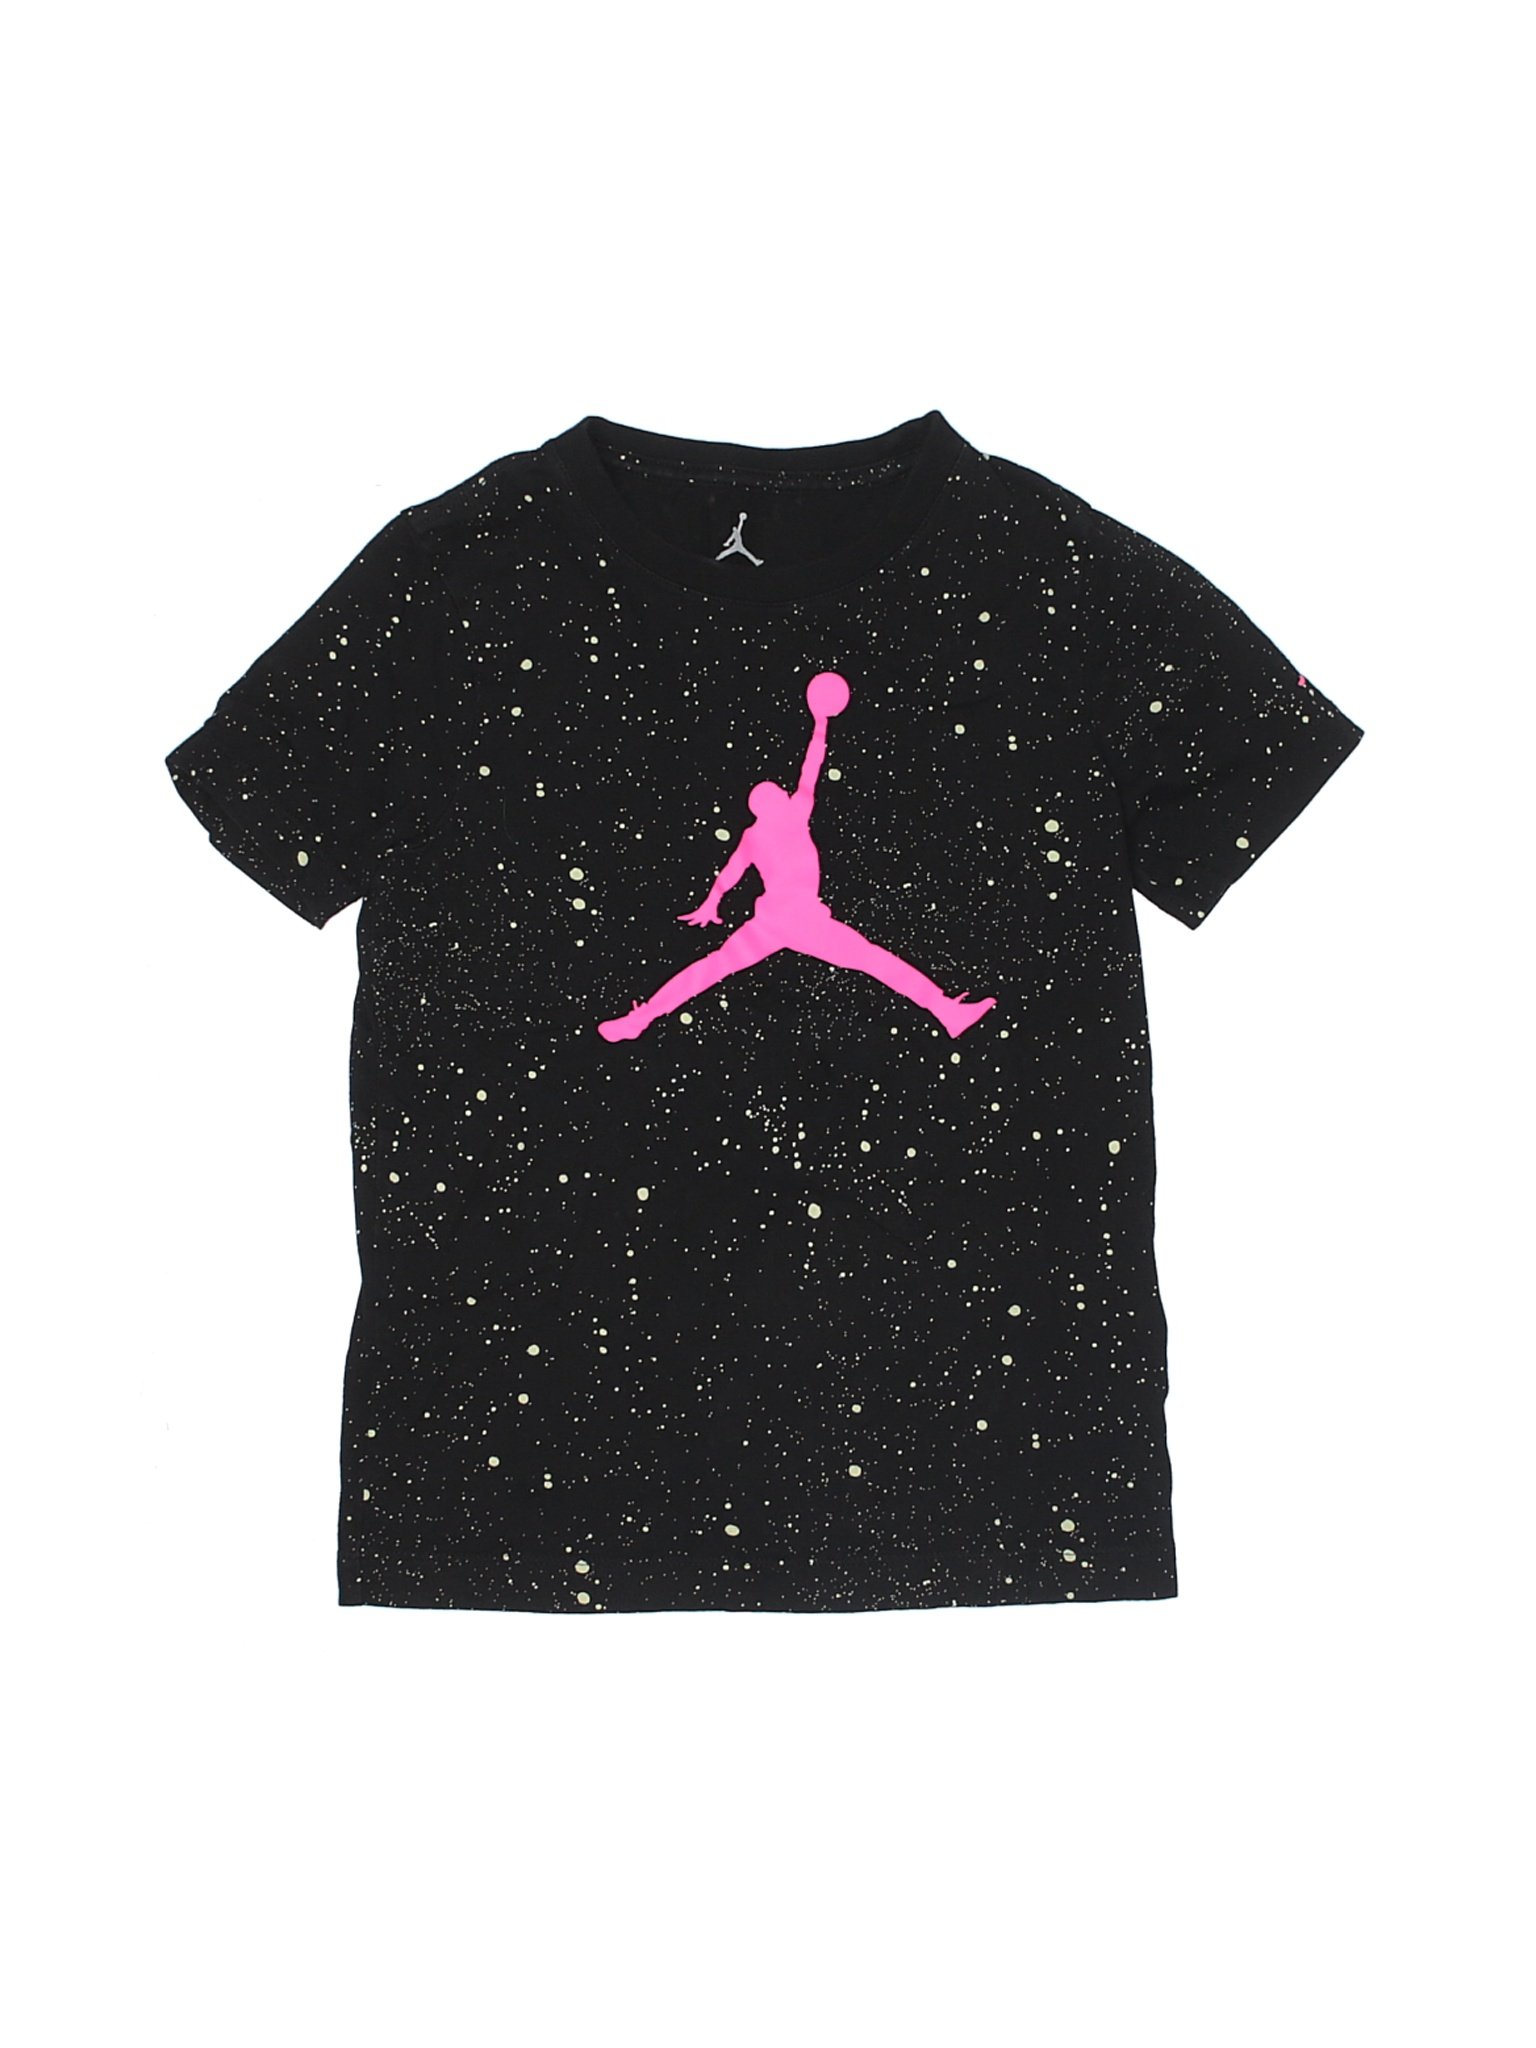 Jordan Boys Black Short Sleeve T-Shirt S Youth | eBay